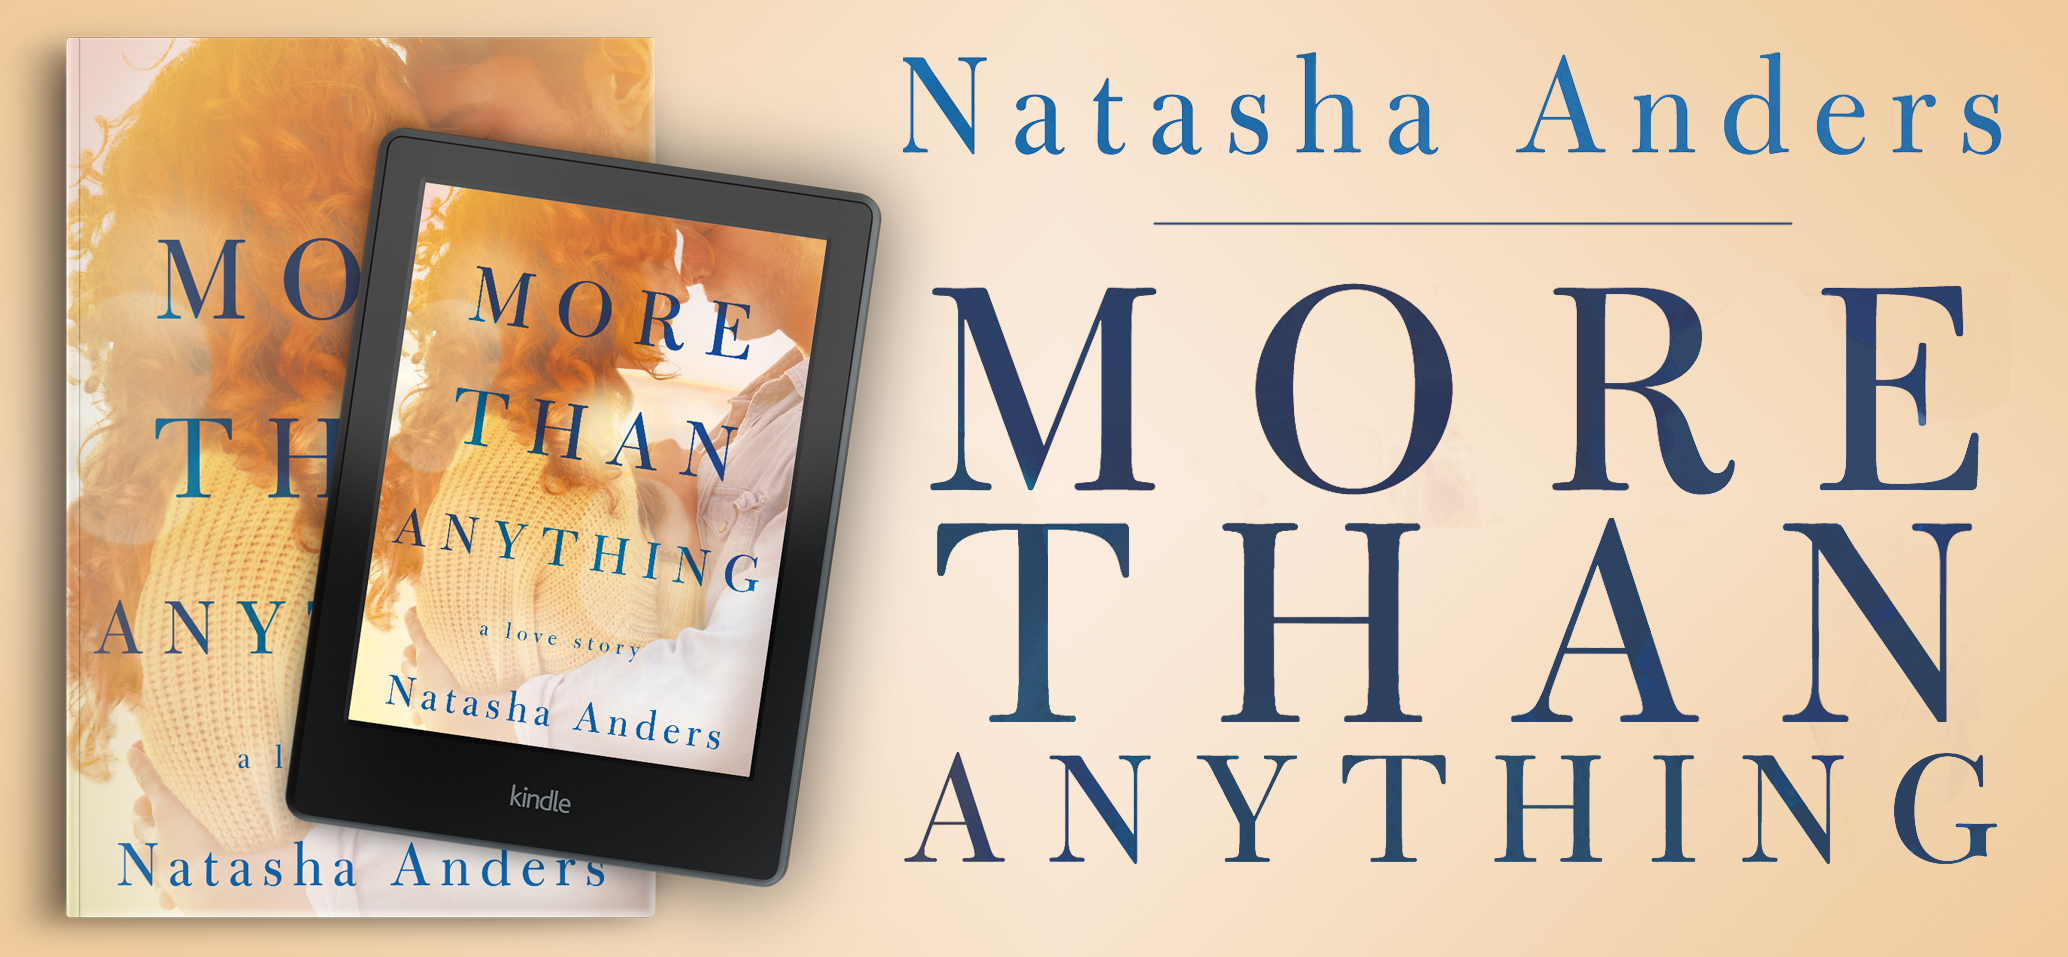 More than Anything by Natasha Anders